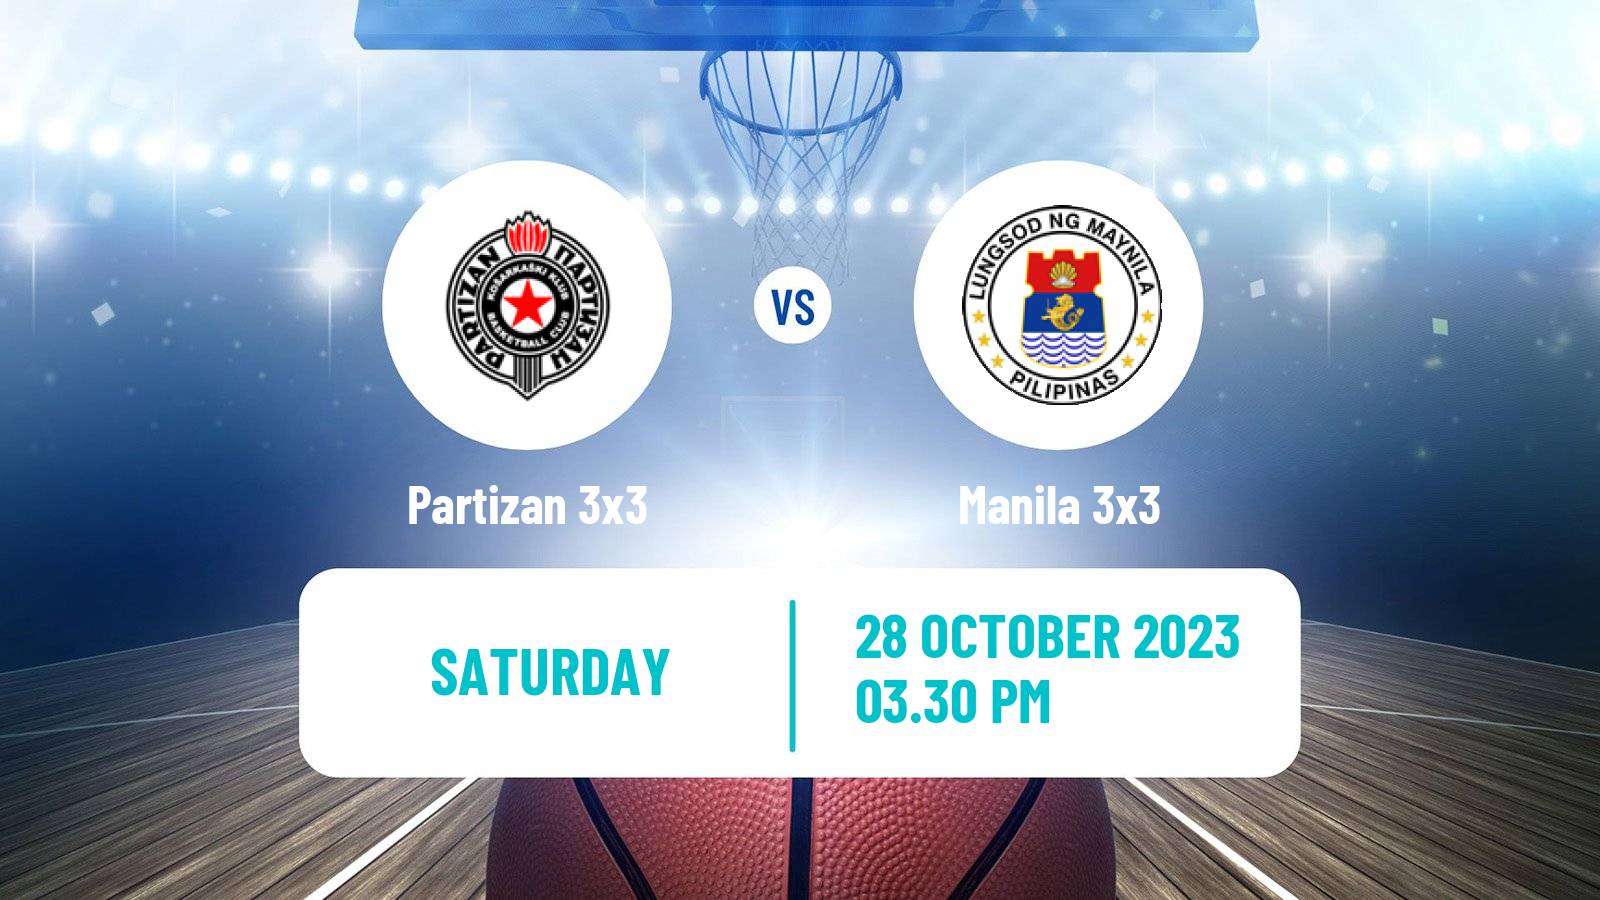 Basketball World Tour Abu Dhabi 3x3 Partizan 3x3 - Manila 3x3